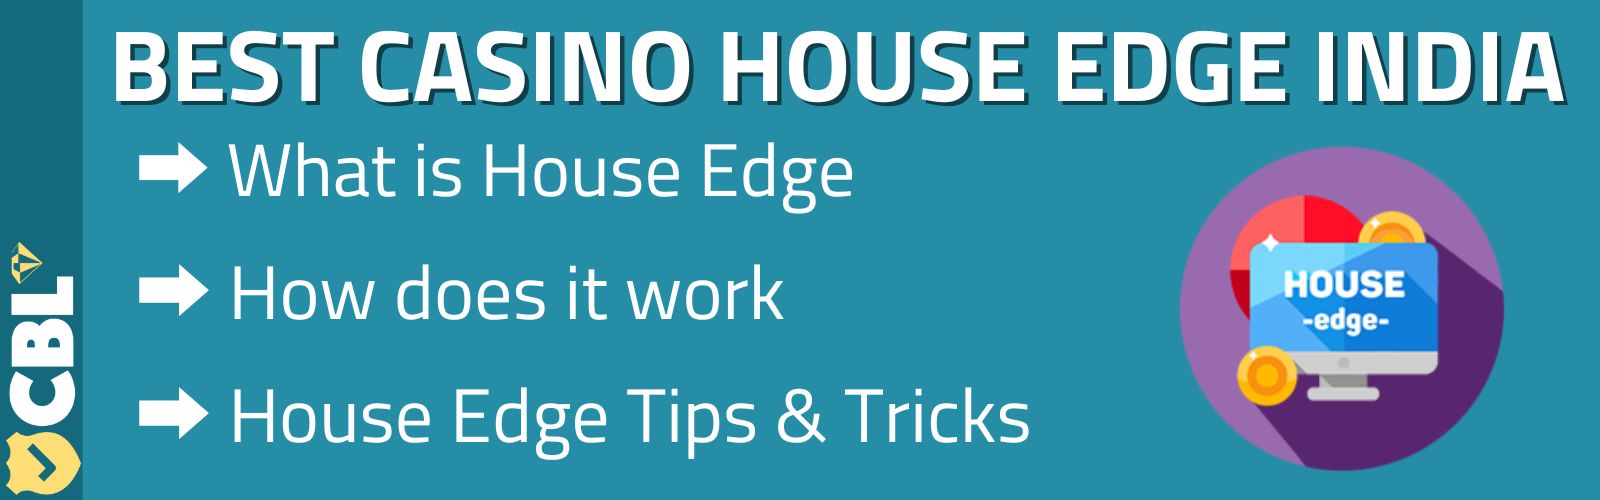 casino house edge